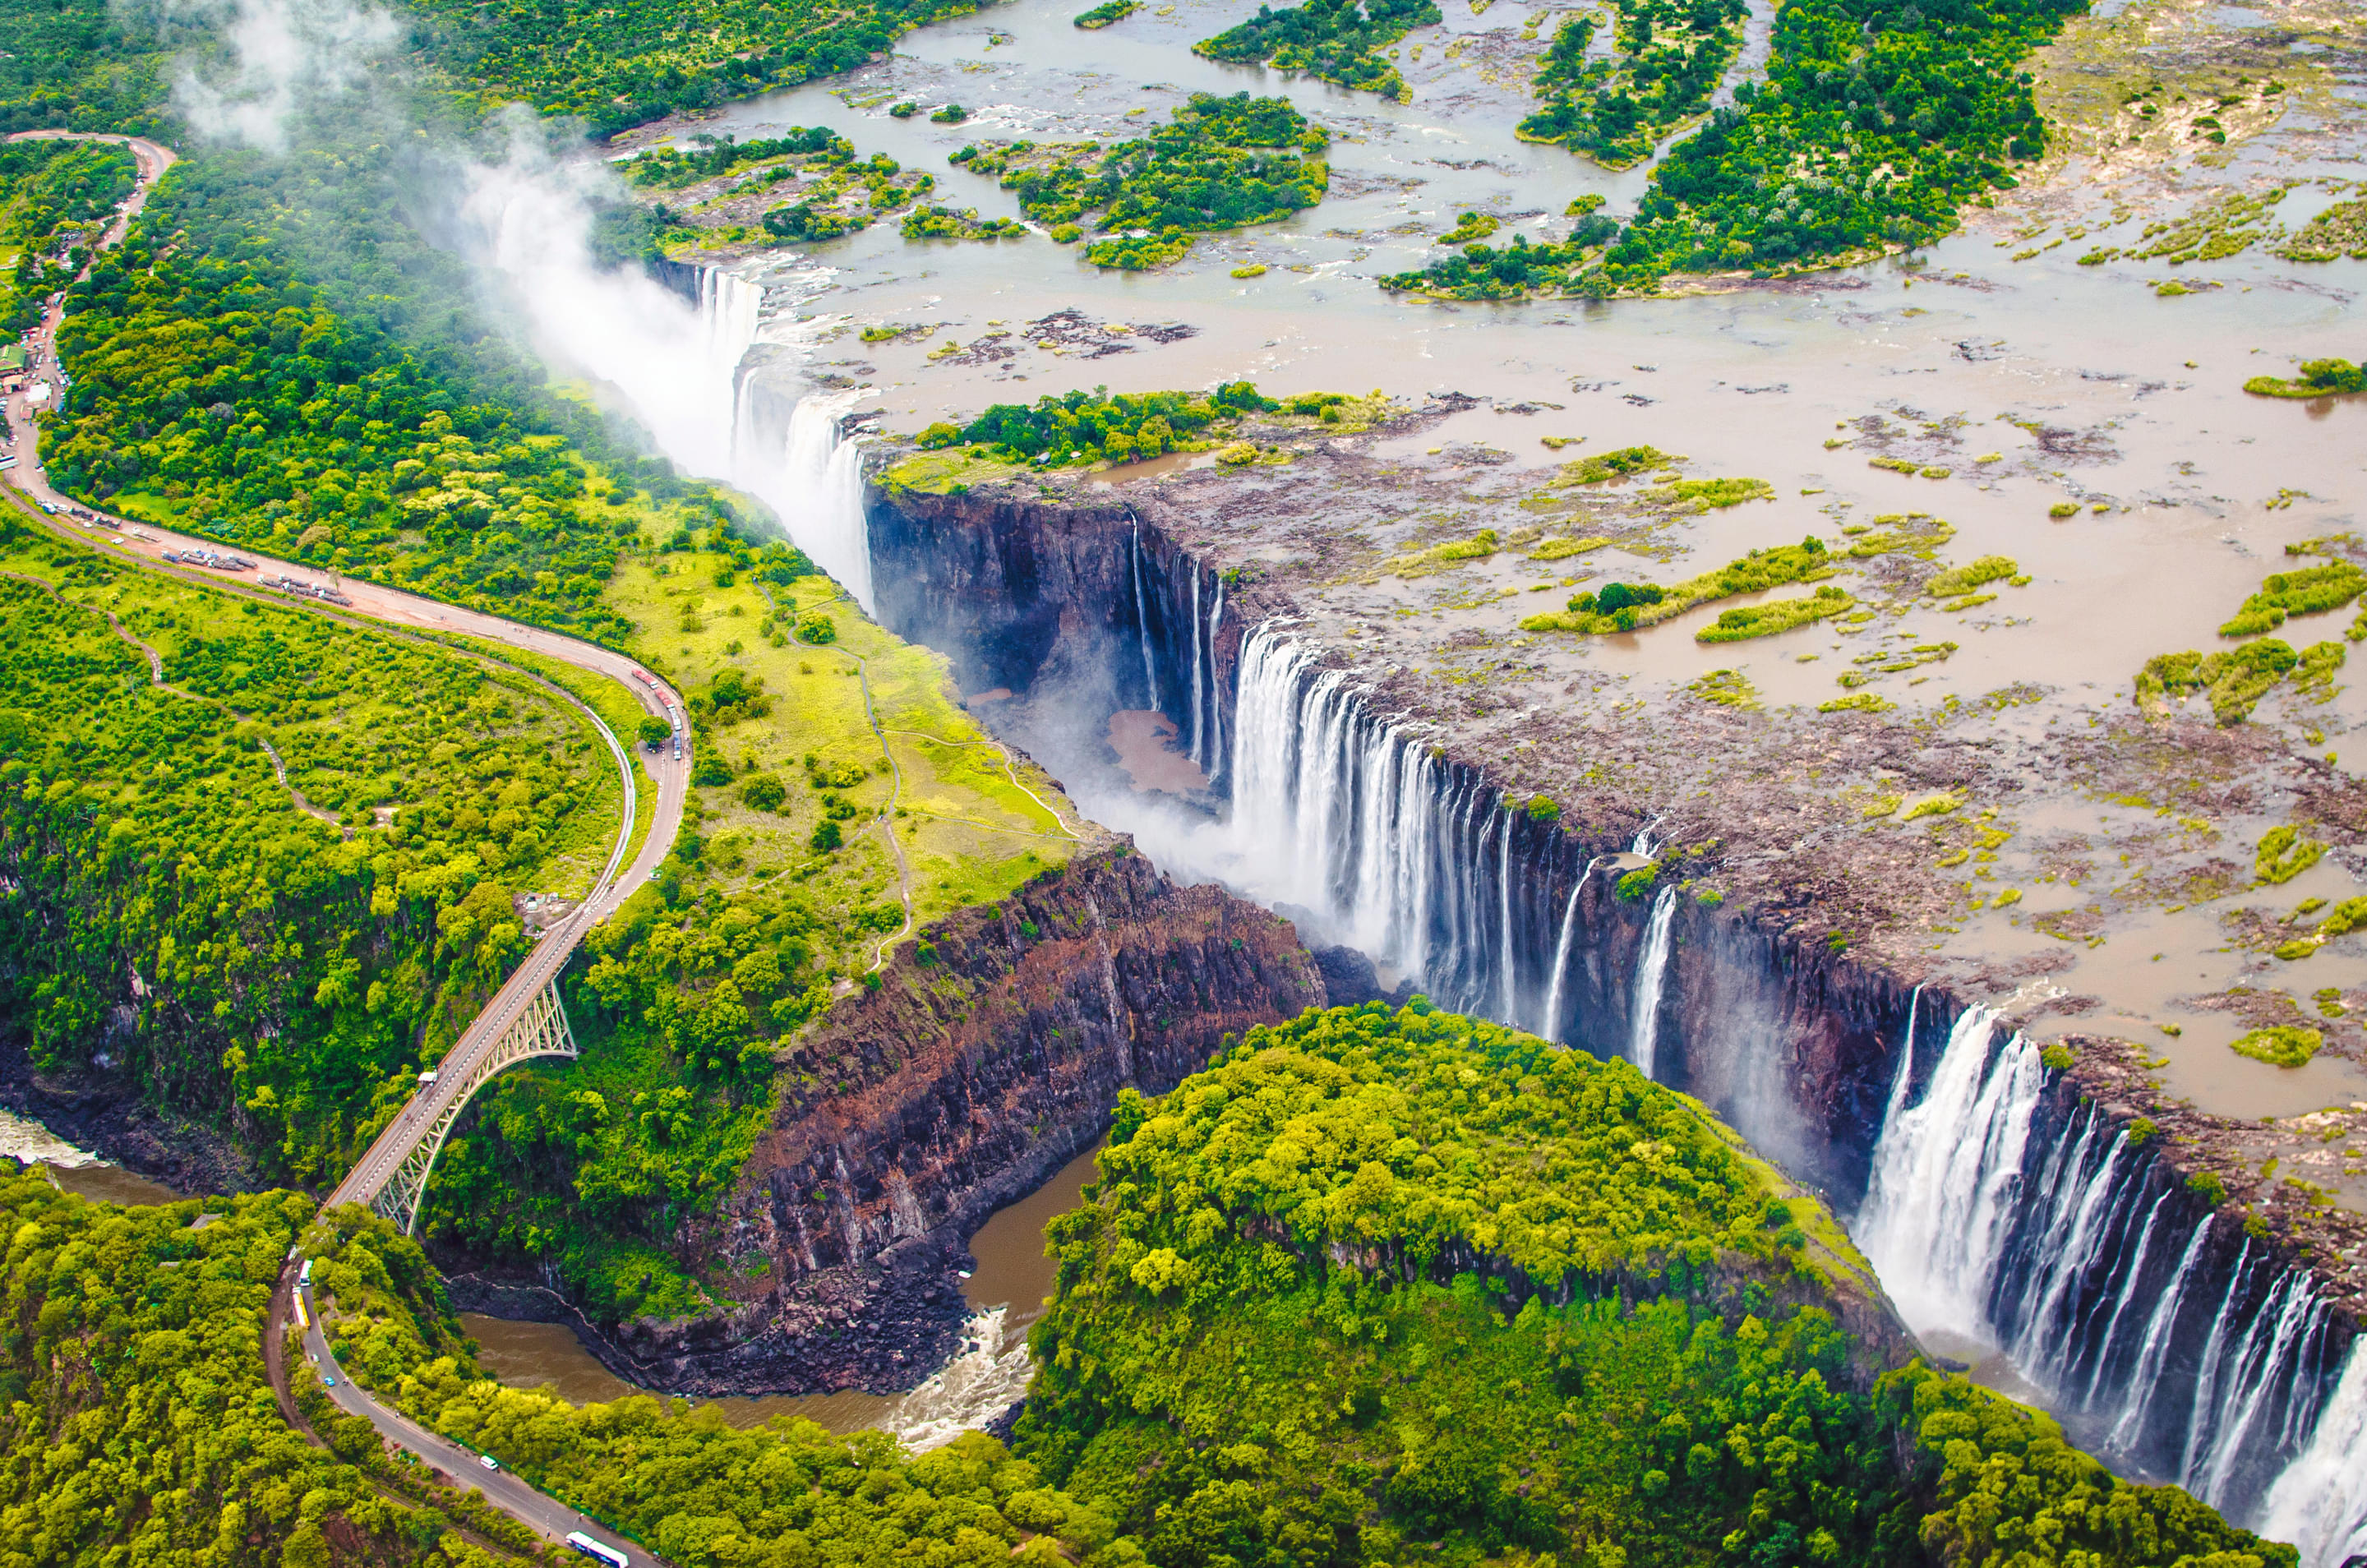 Victoria Falls Overview